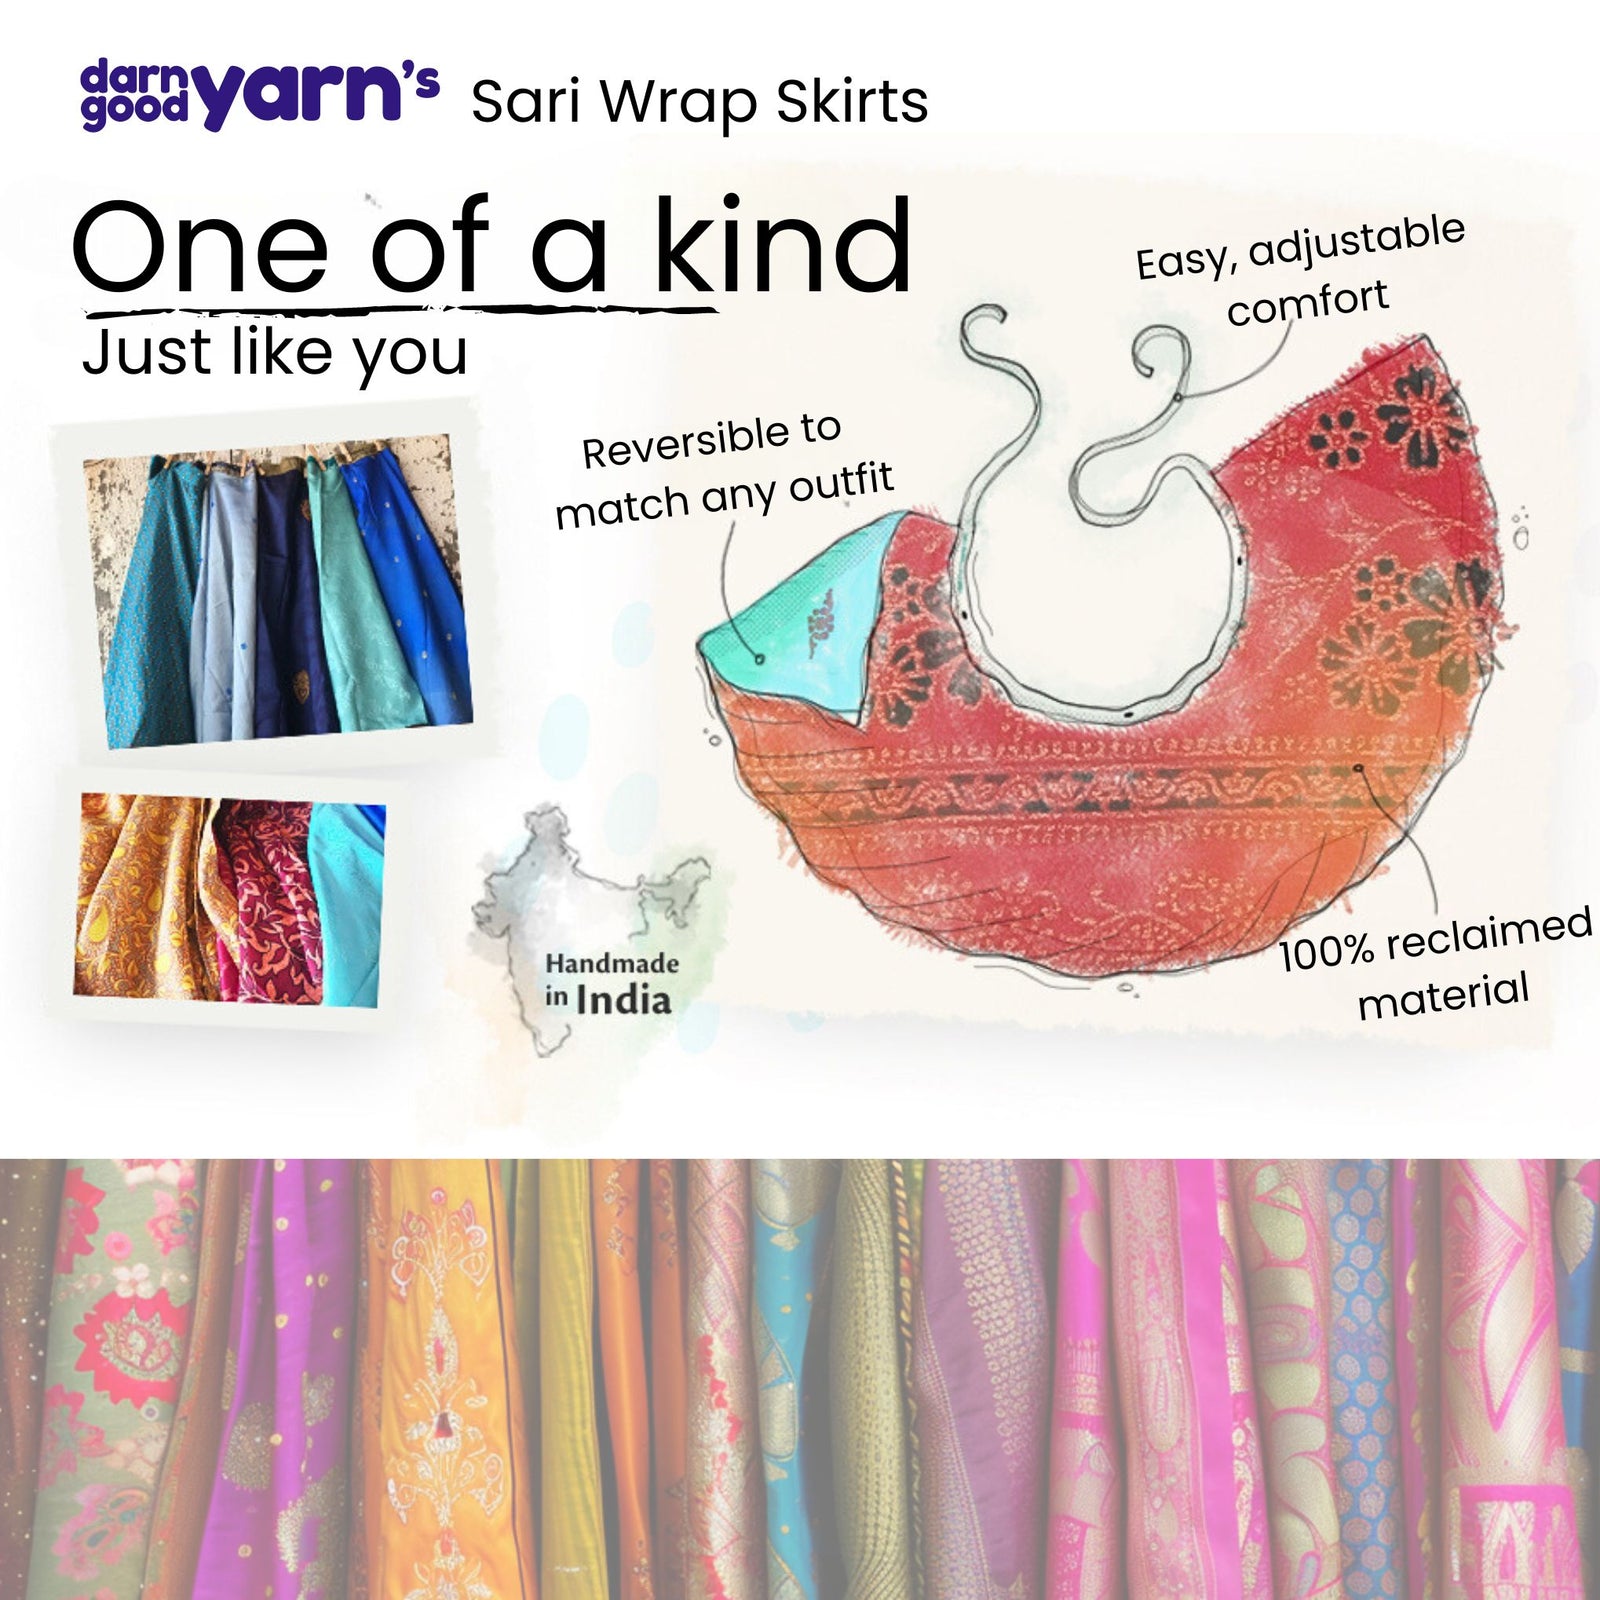 infographic of sari wrap skirt